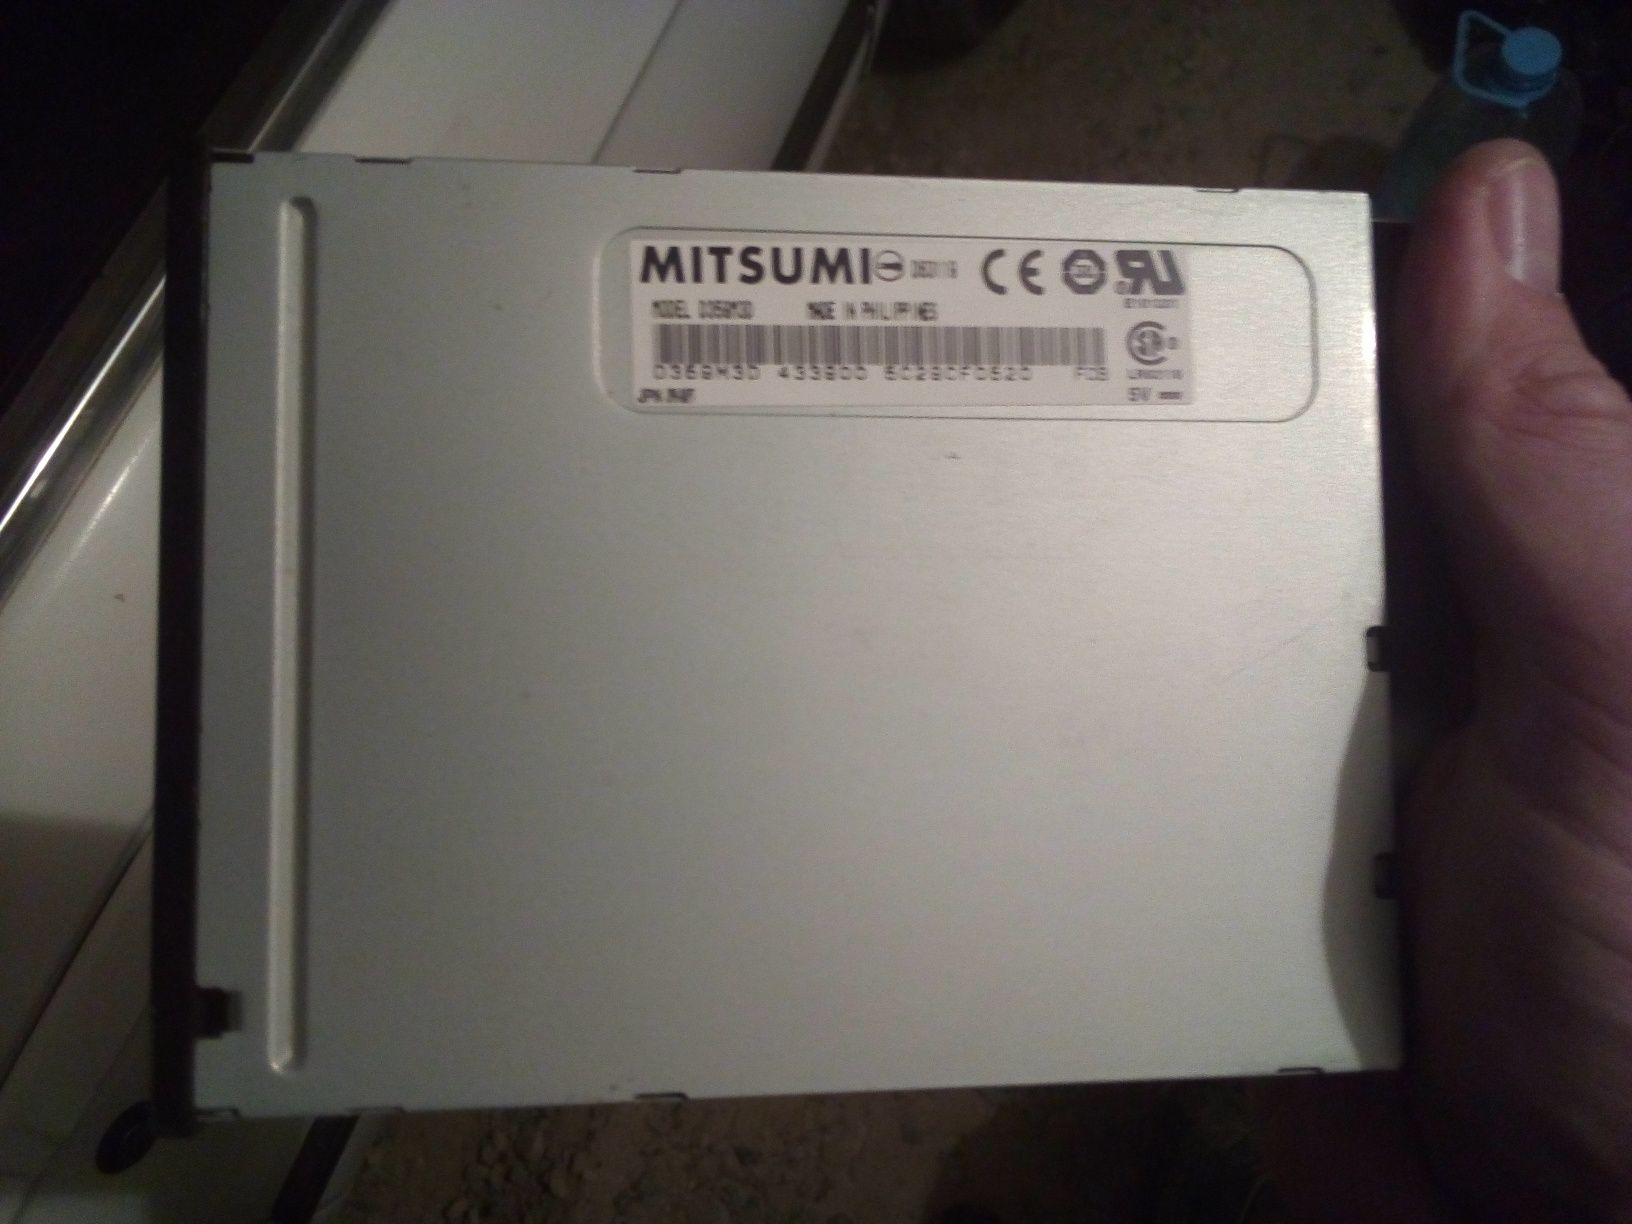 Floppy-дисковод (для дискет) Mitsumi